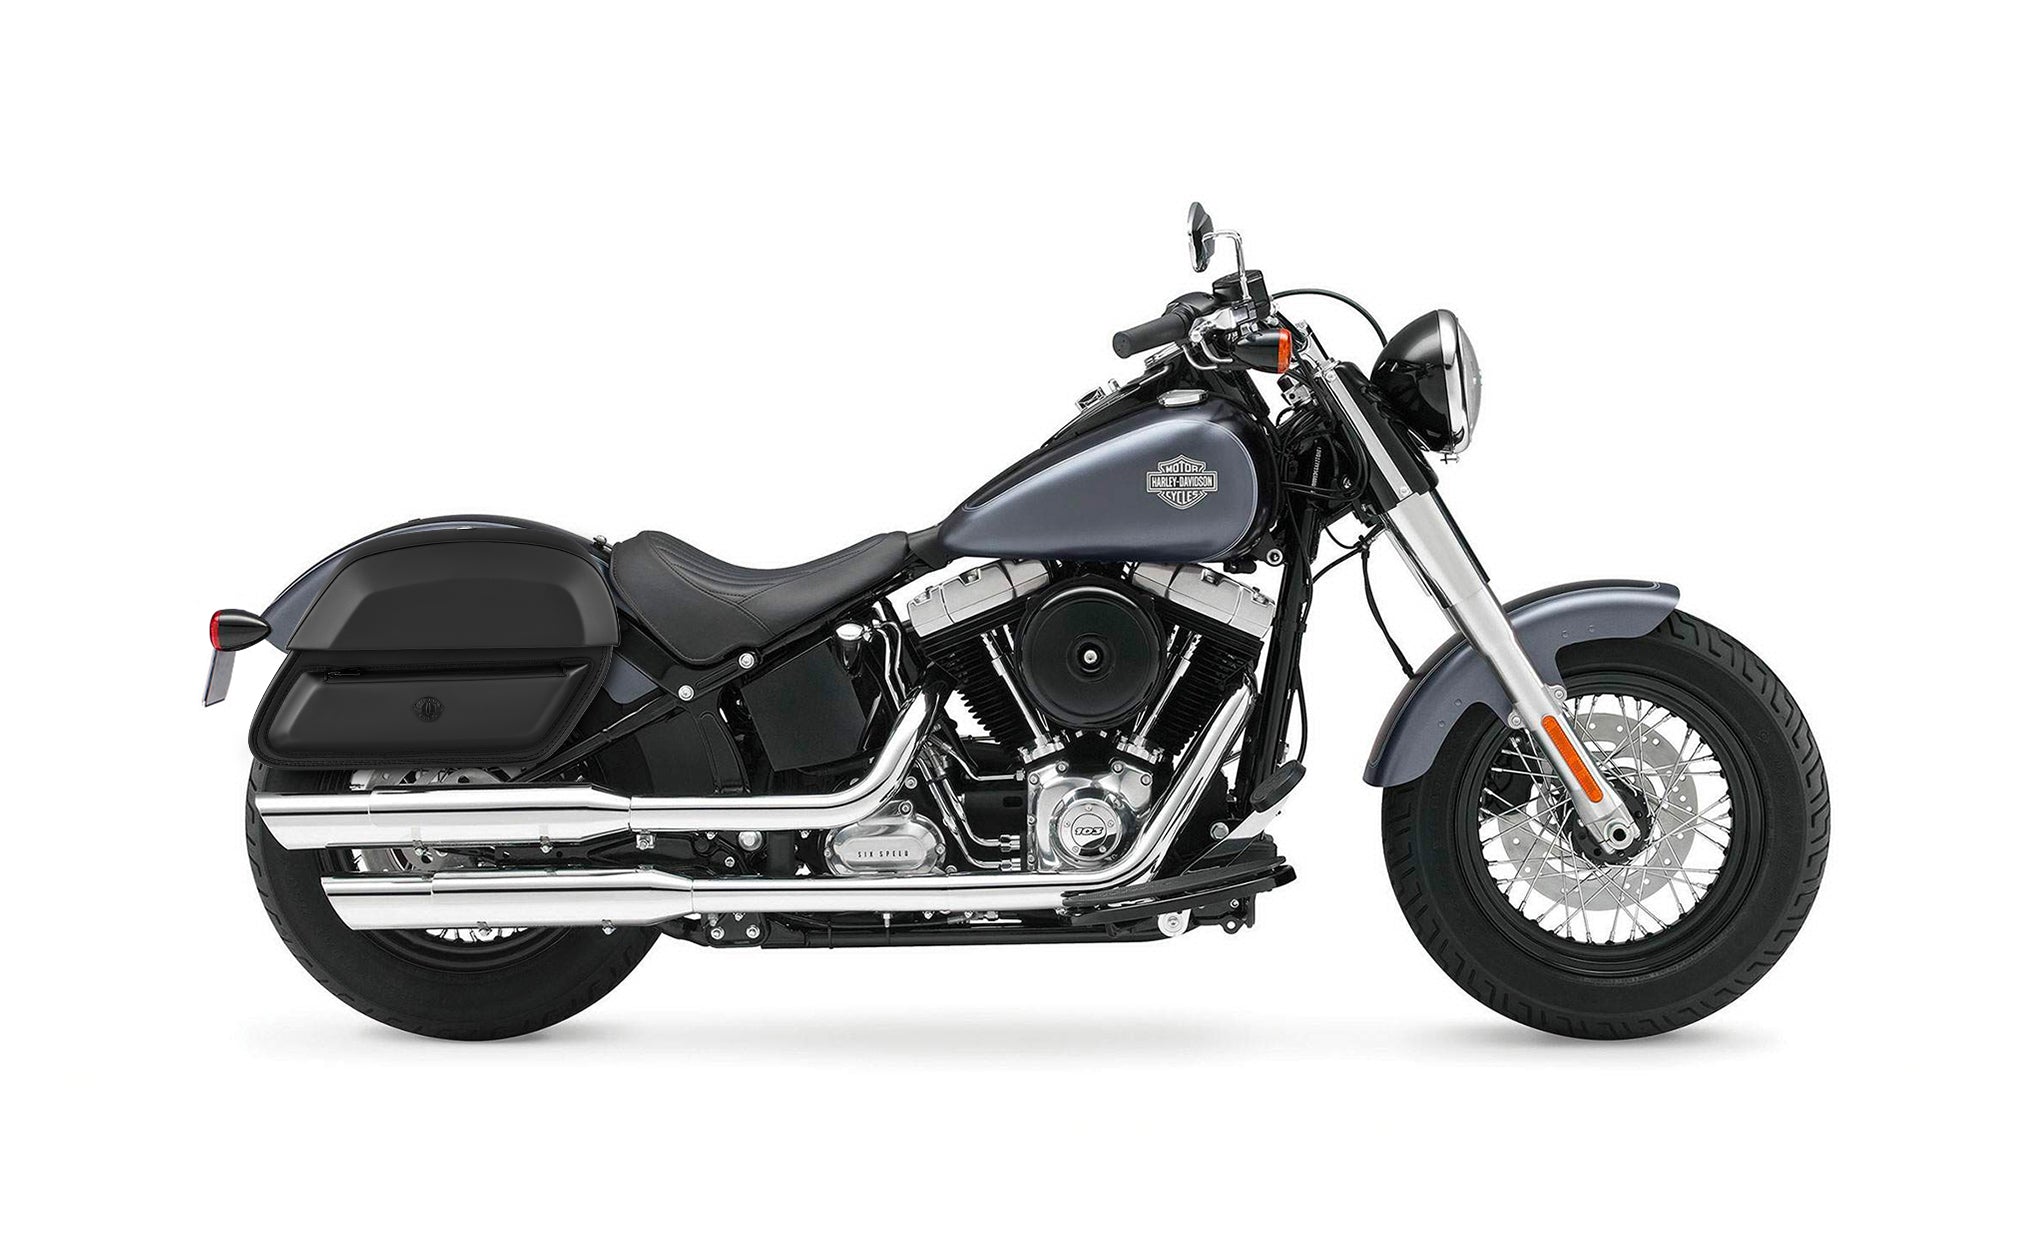 28L - Wraith Medium Leather Saddlebags for Harley Softail Slim FLS BAG on Bike View @expand